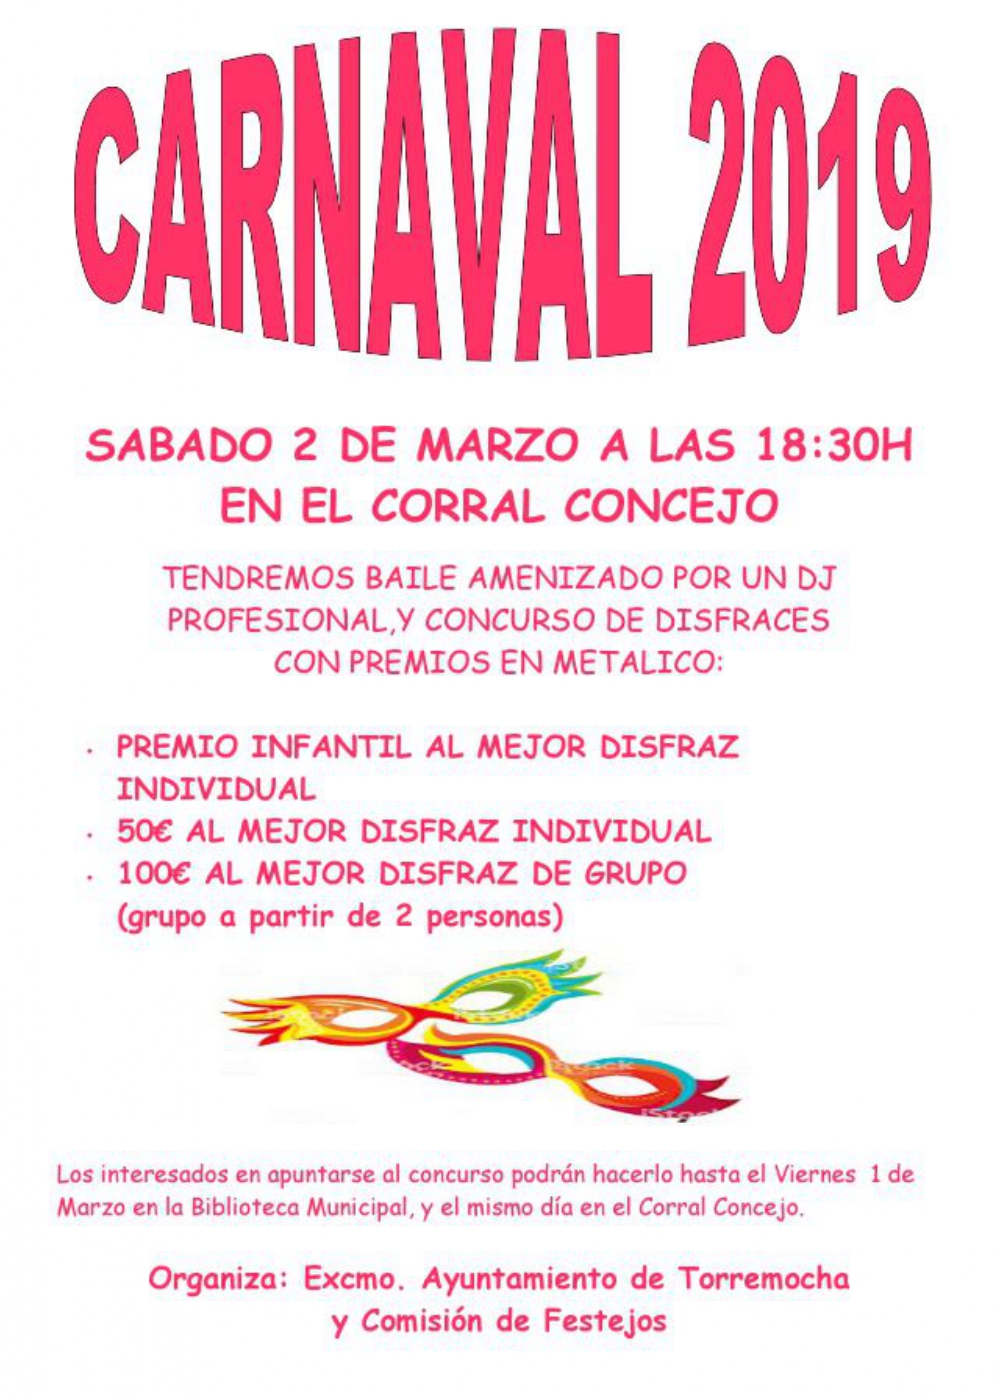 Carnaval 2019 - Torremocha (Cáceres)